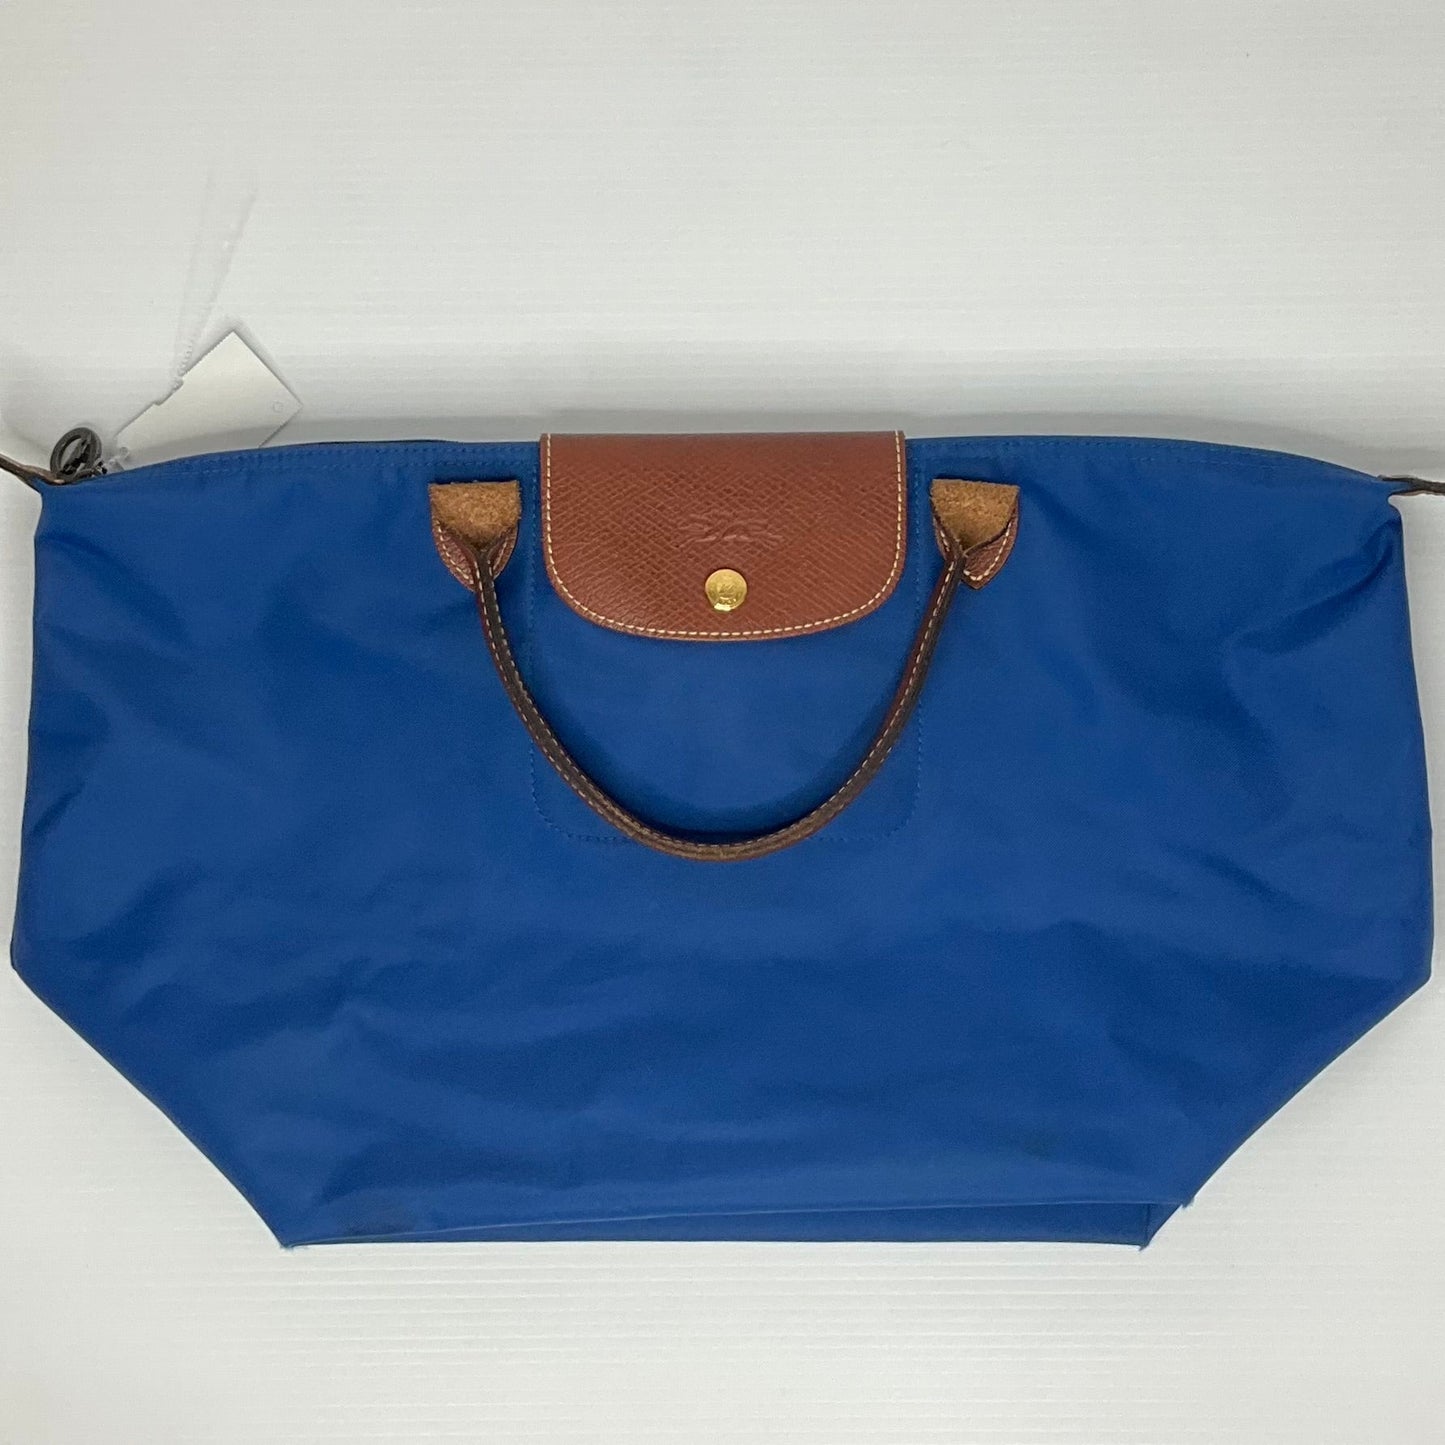 Handbag Designer Longchamp, Size Medium